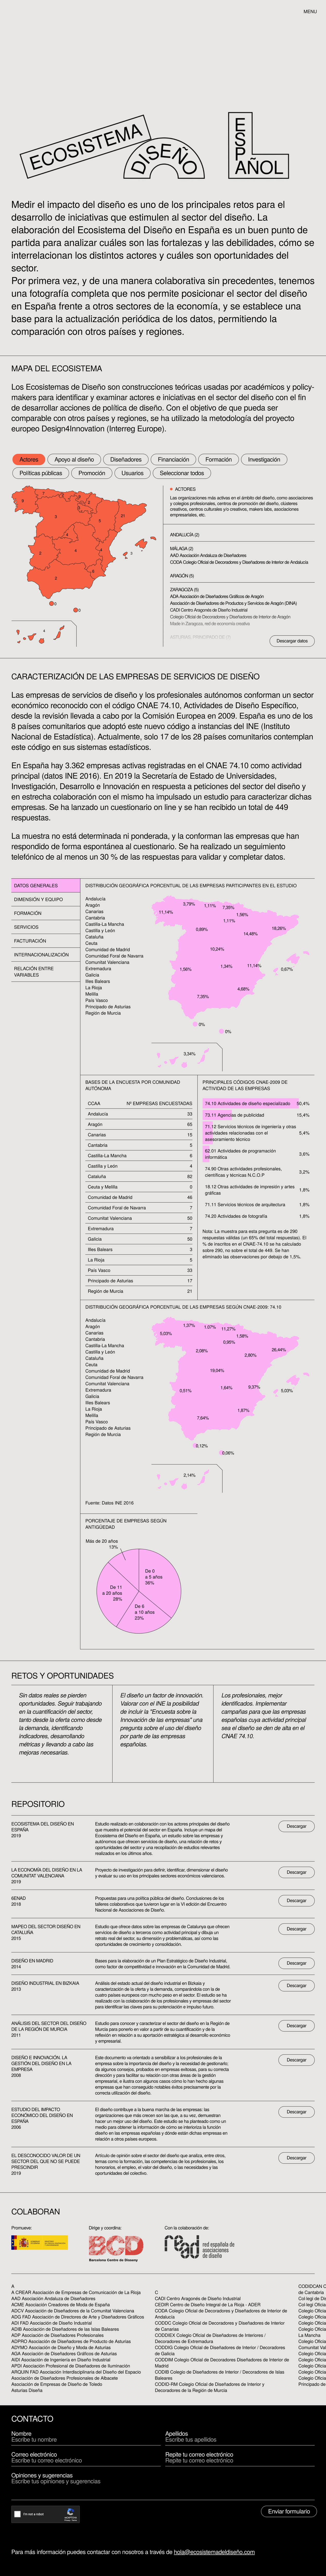 Ecosistema del Diseño Español Website Screenshot